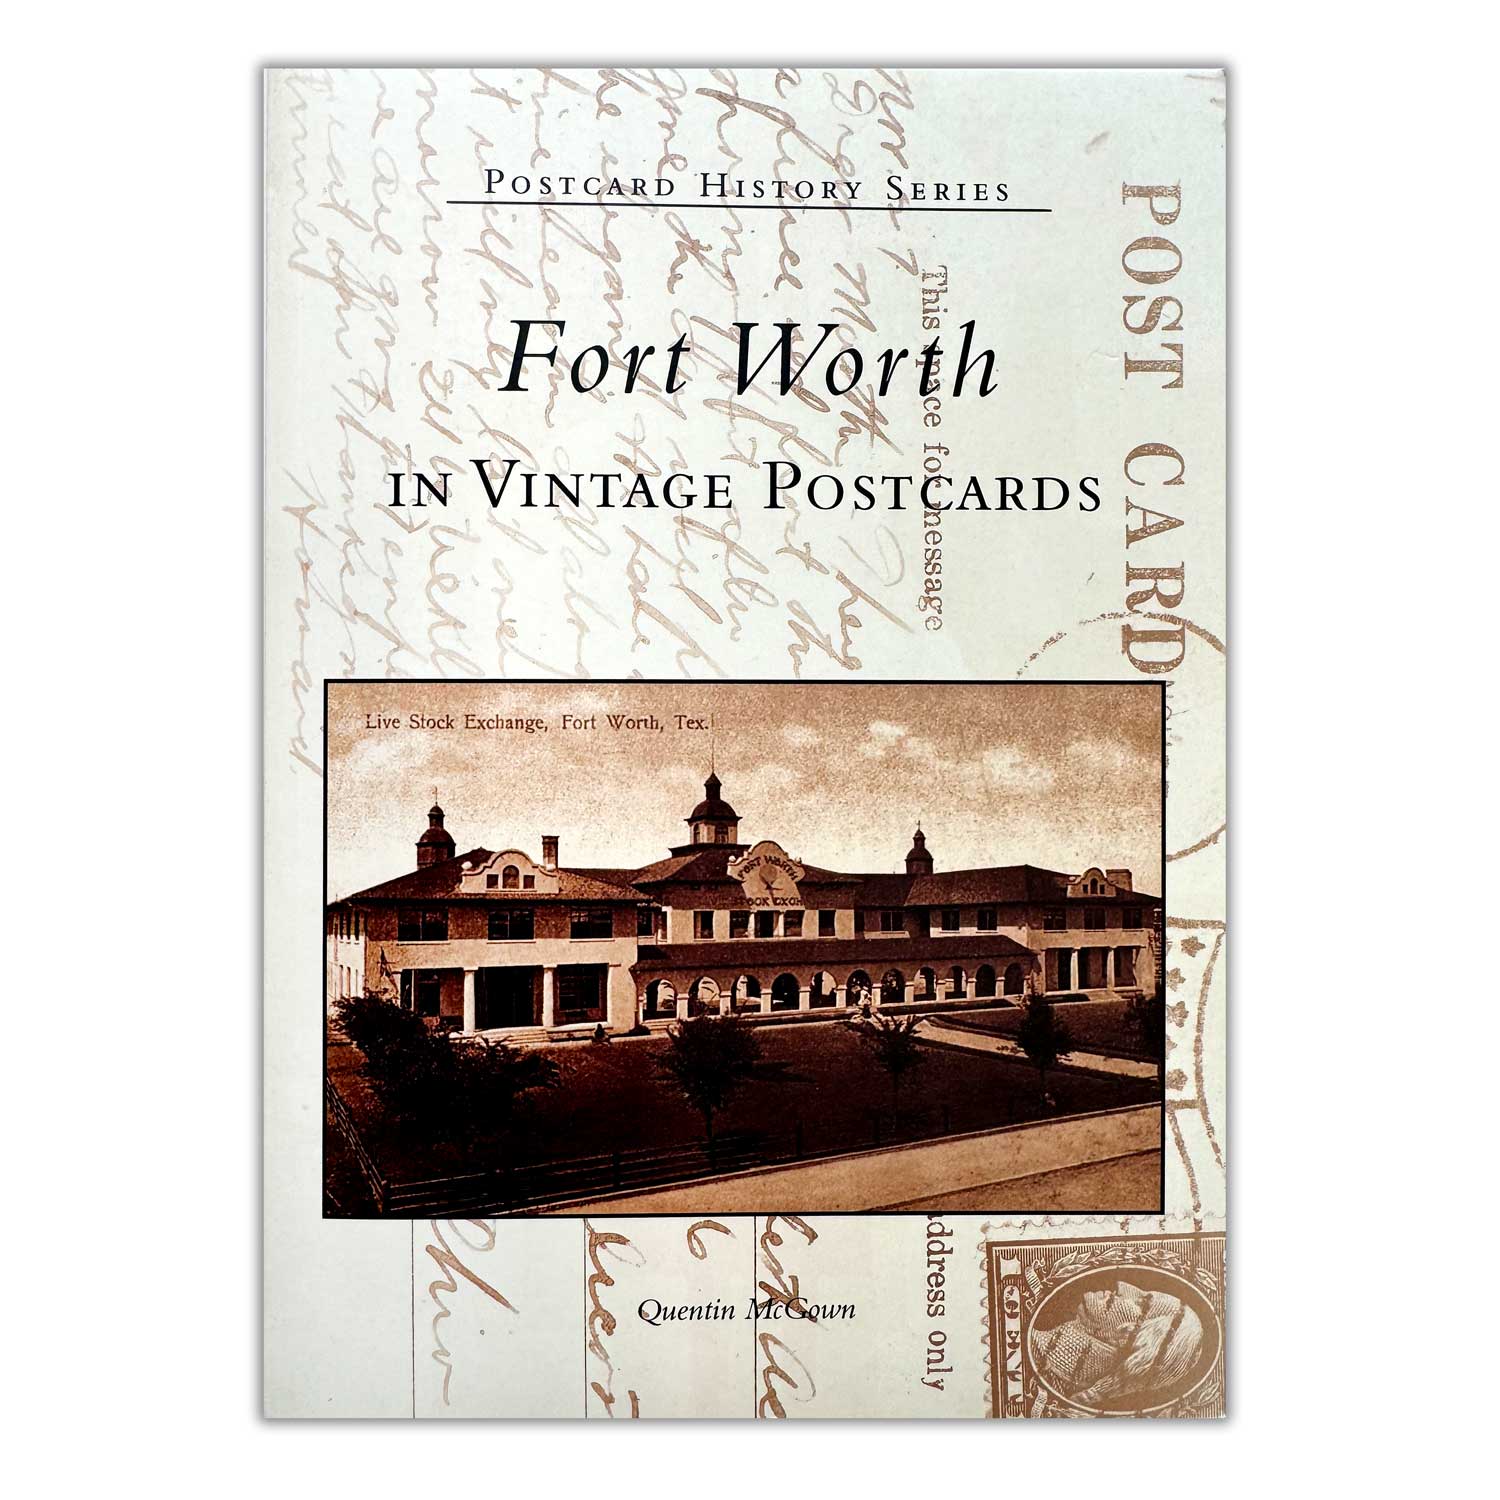 Postcard History Series, Fort Worth in Vintage Postcards